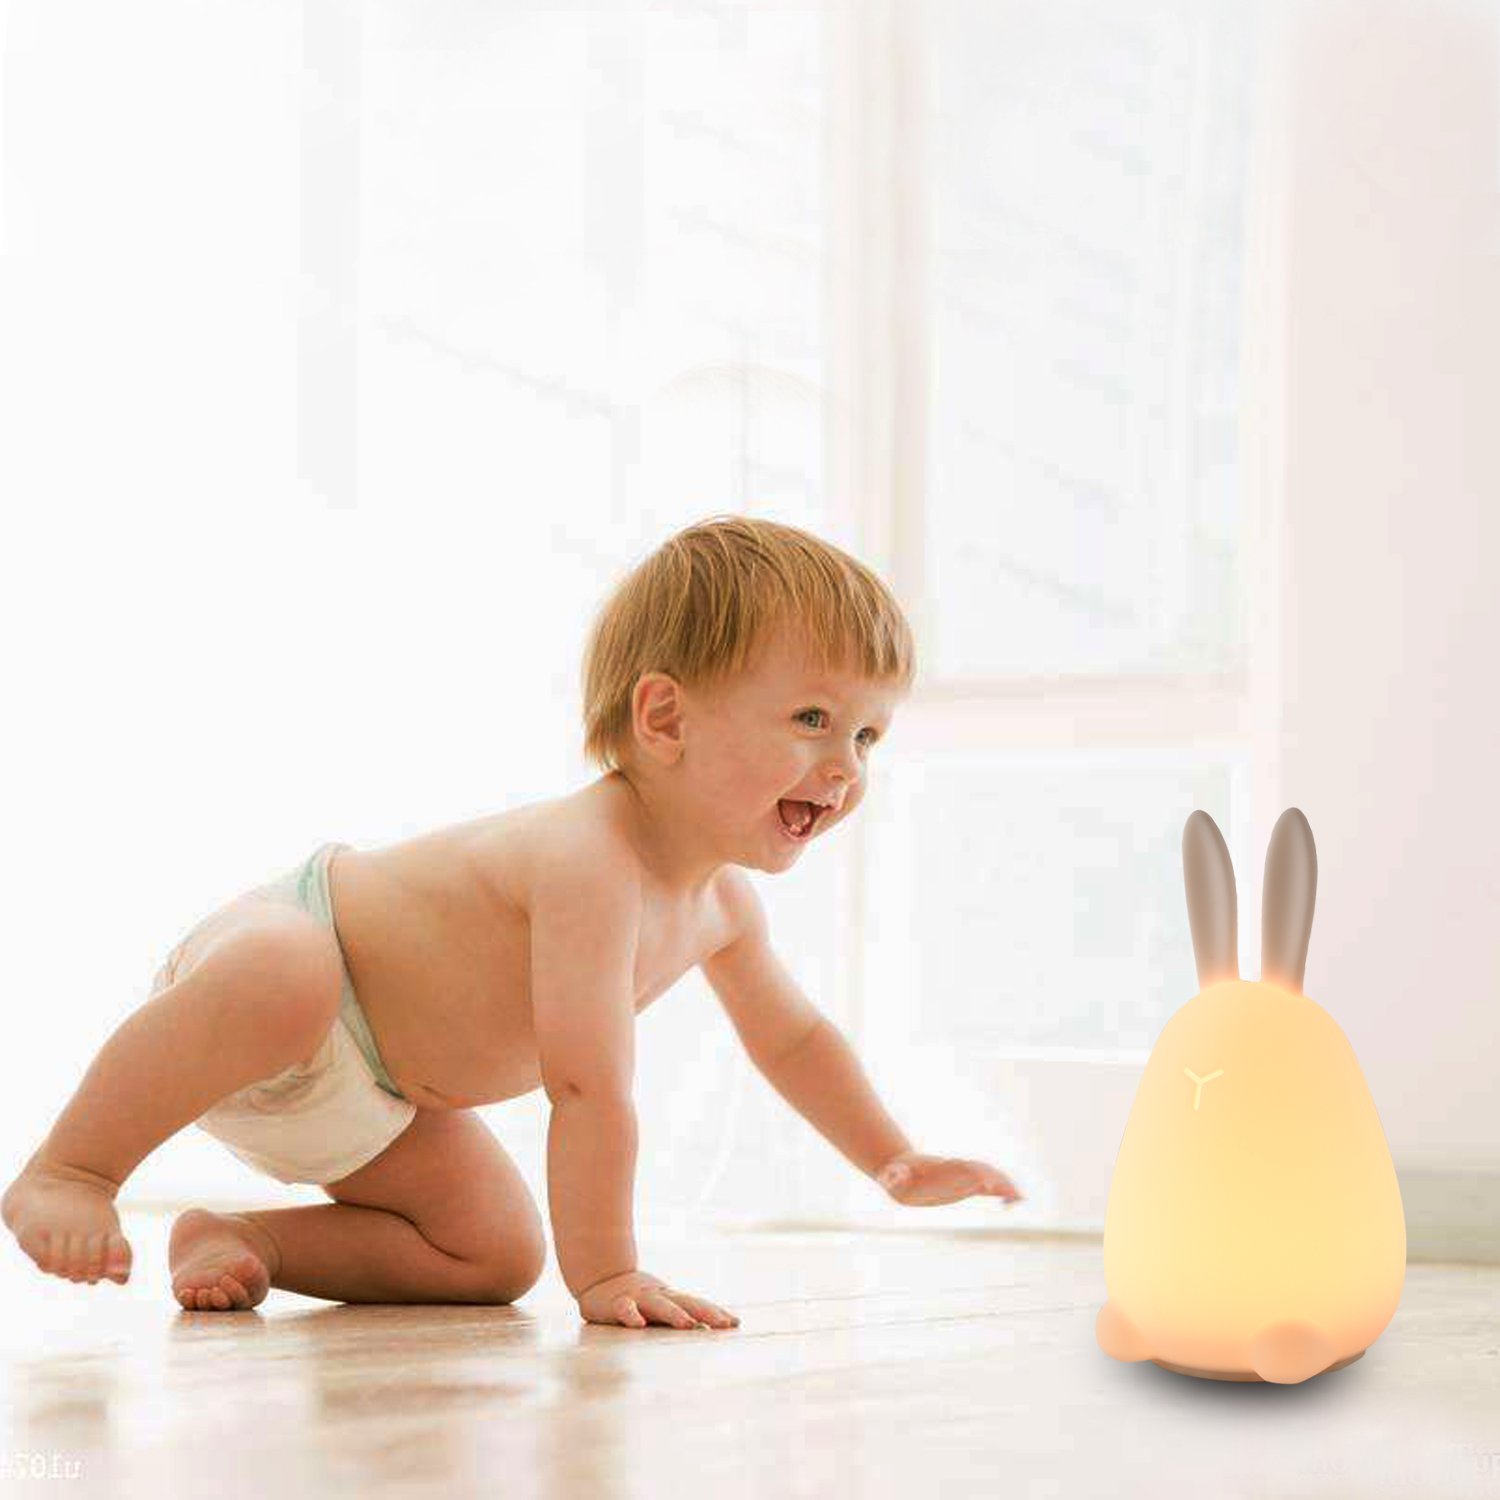 APUPPY Bunny Night Light for Kids